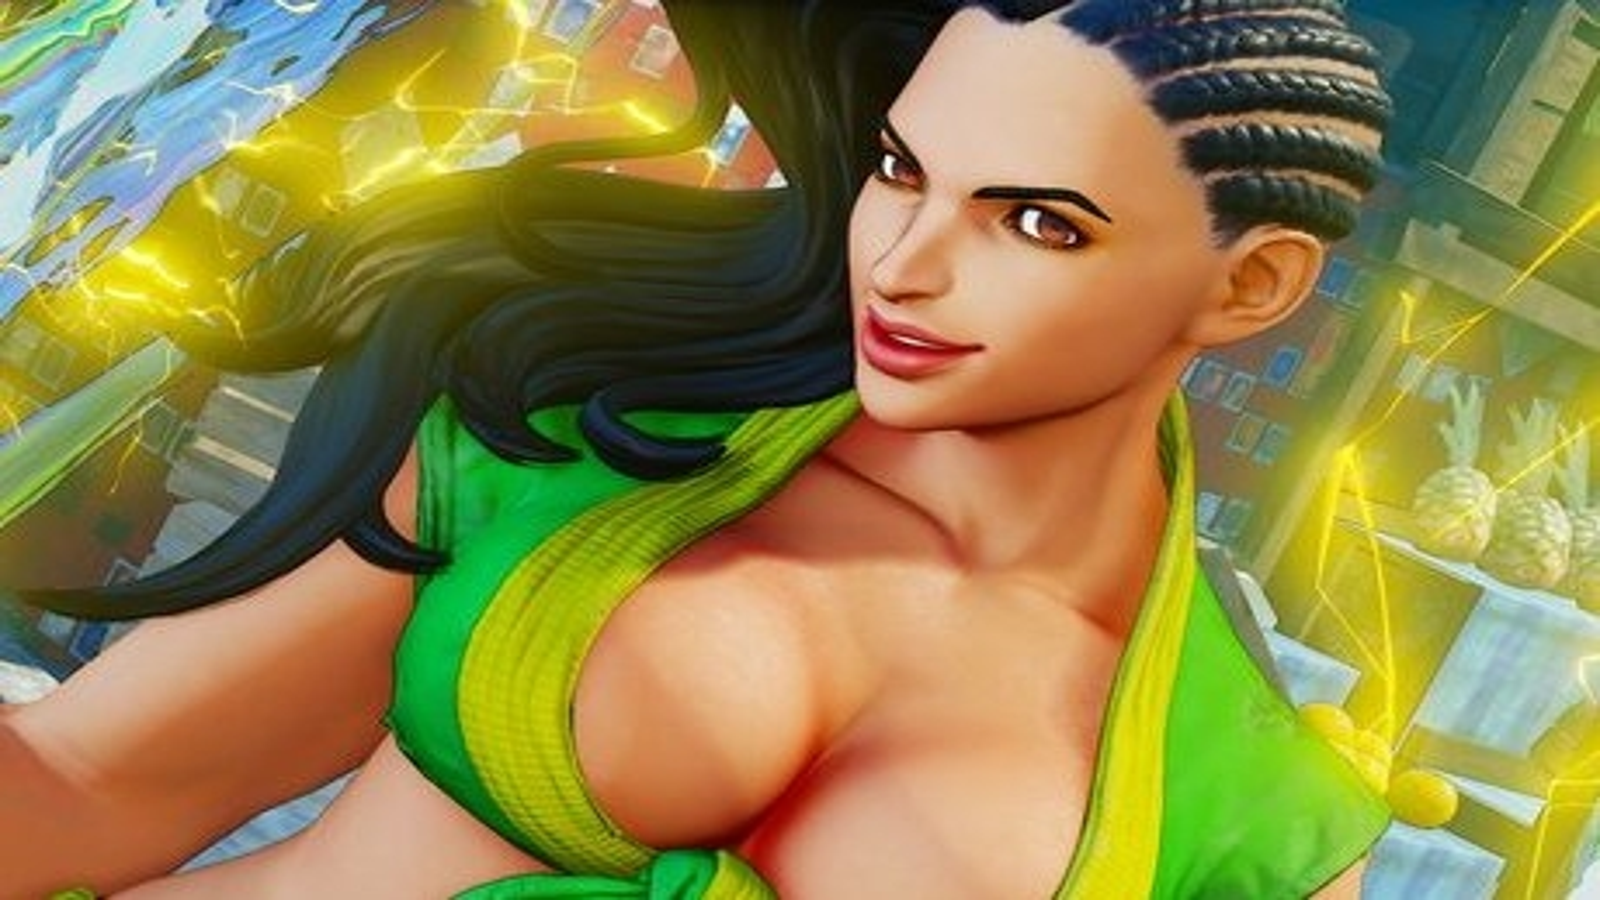 Laura (power 1) FOIL - 2021 Street Fighter NFT Series 1 - MINT# 1,285